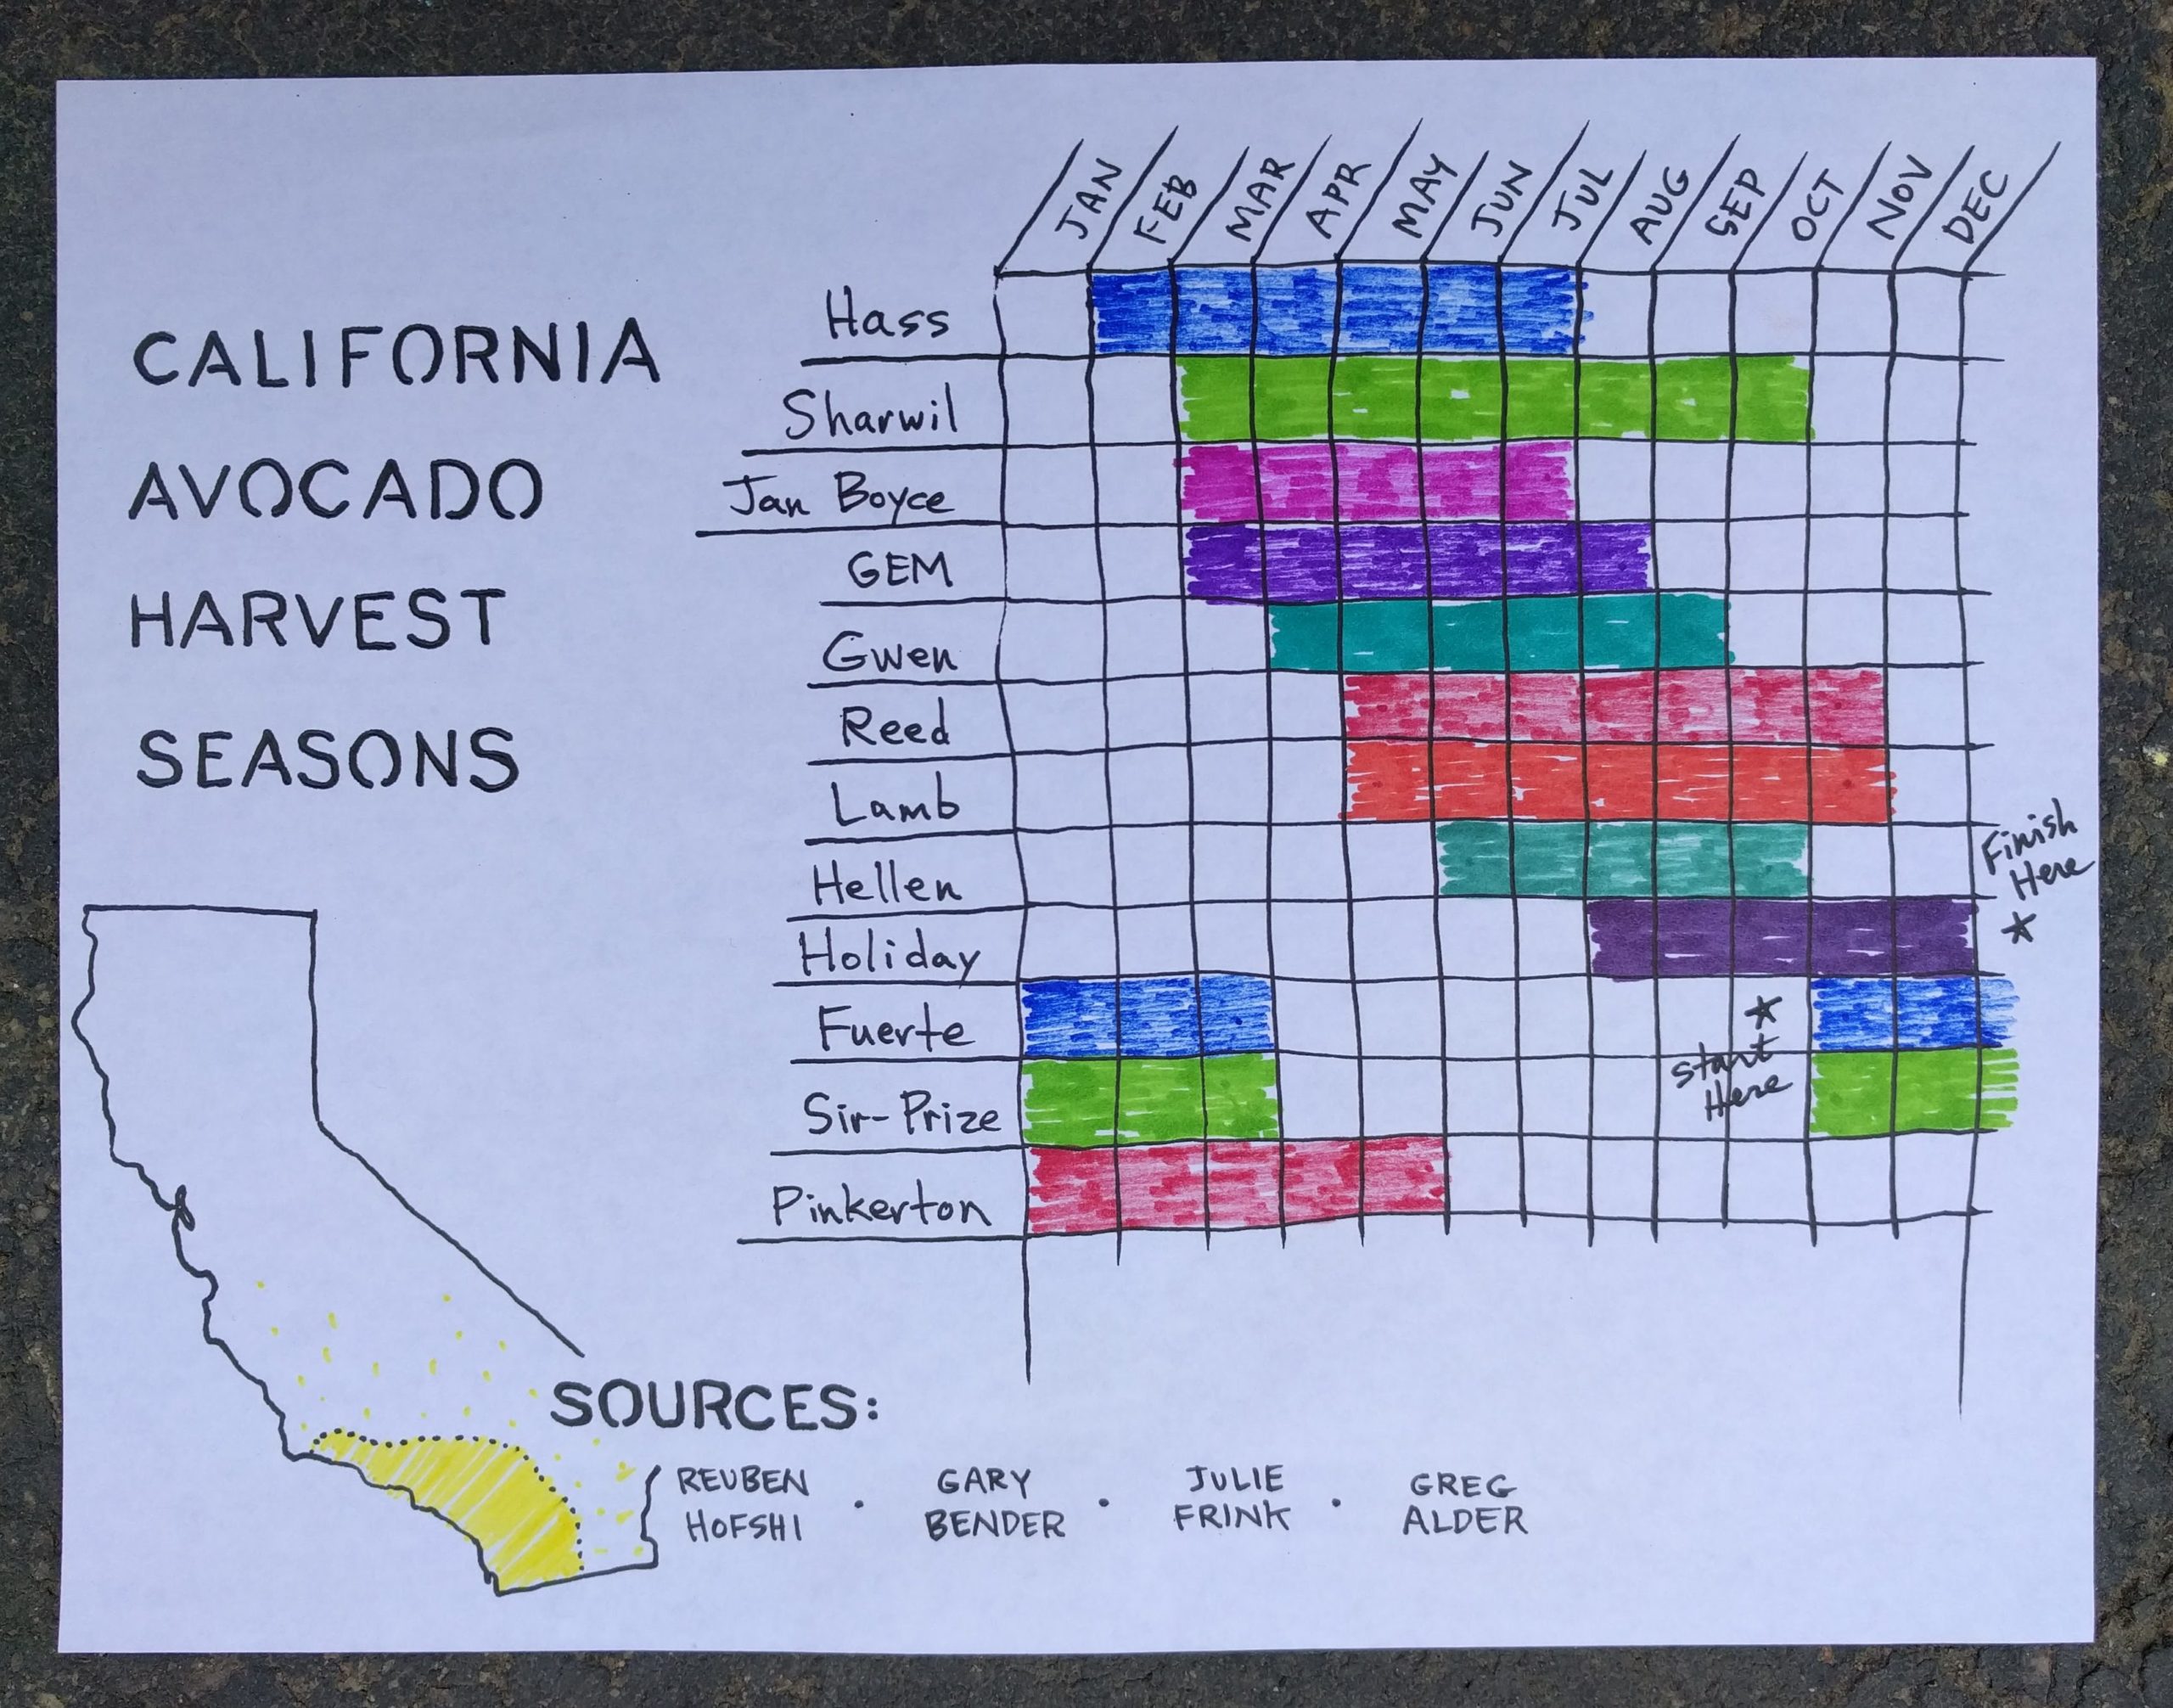 California avocado harvest chart Greg Alder's Yard Posts Food